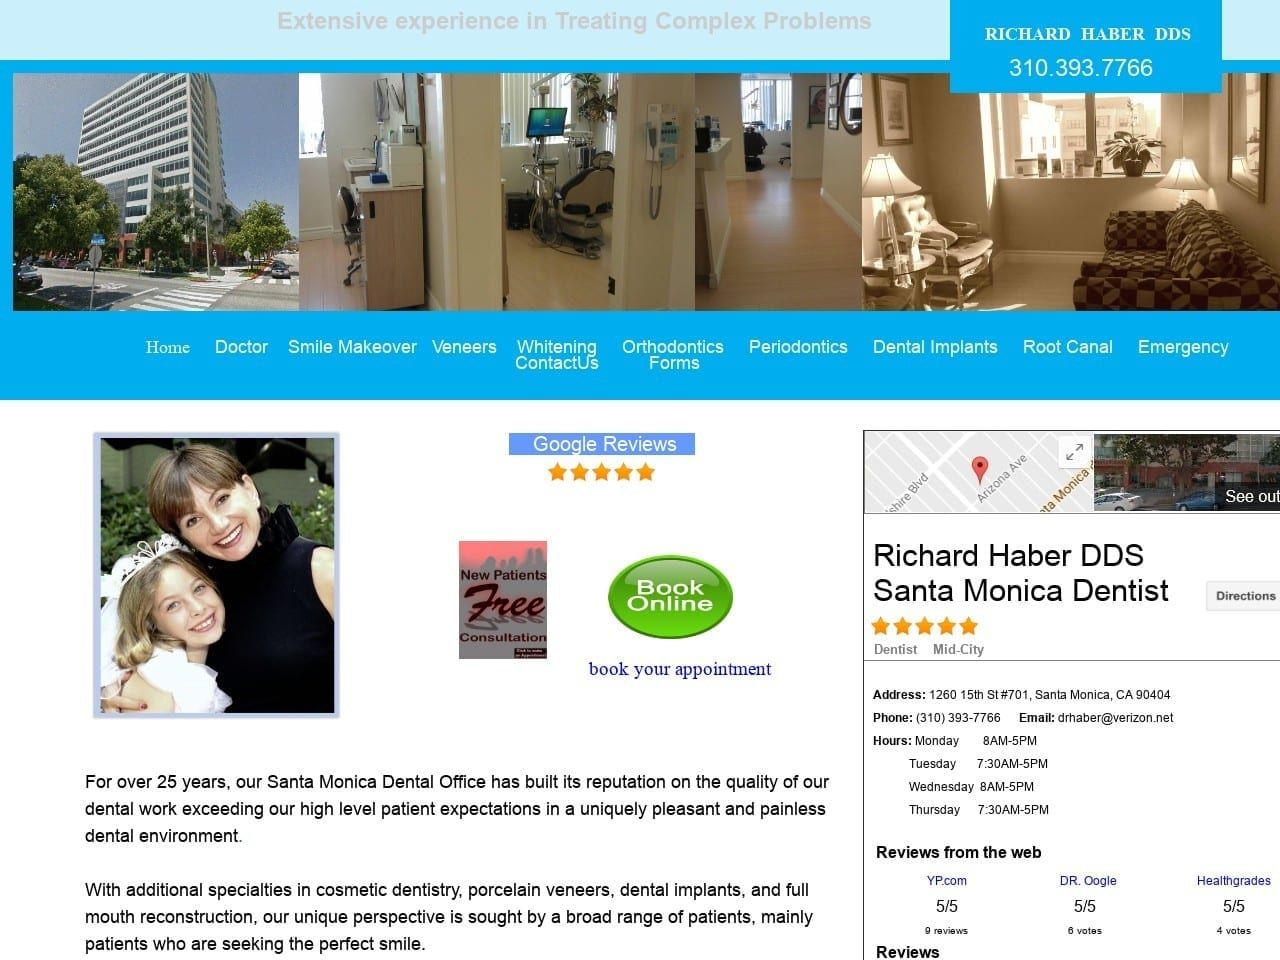 Richard Haber DDS Santa Monica Dentist Website Screenshot from drhaber.net